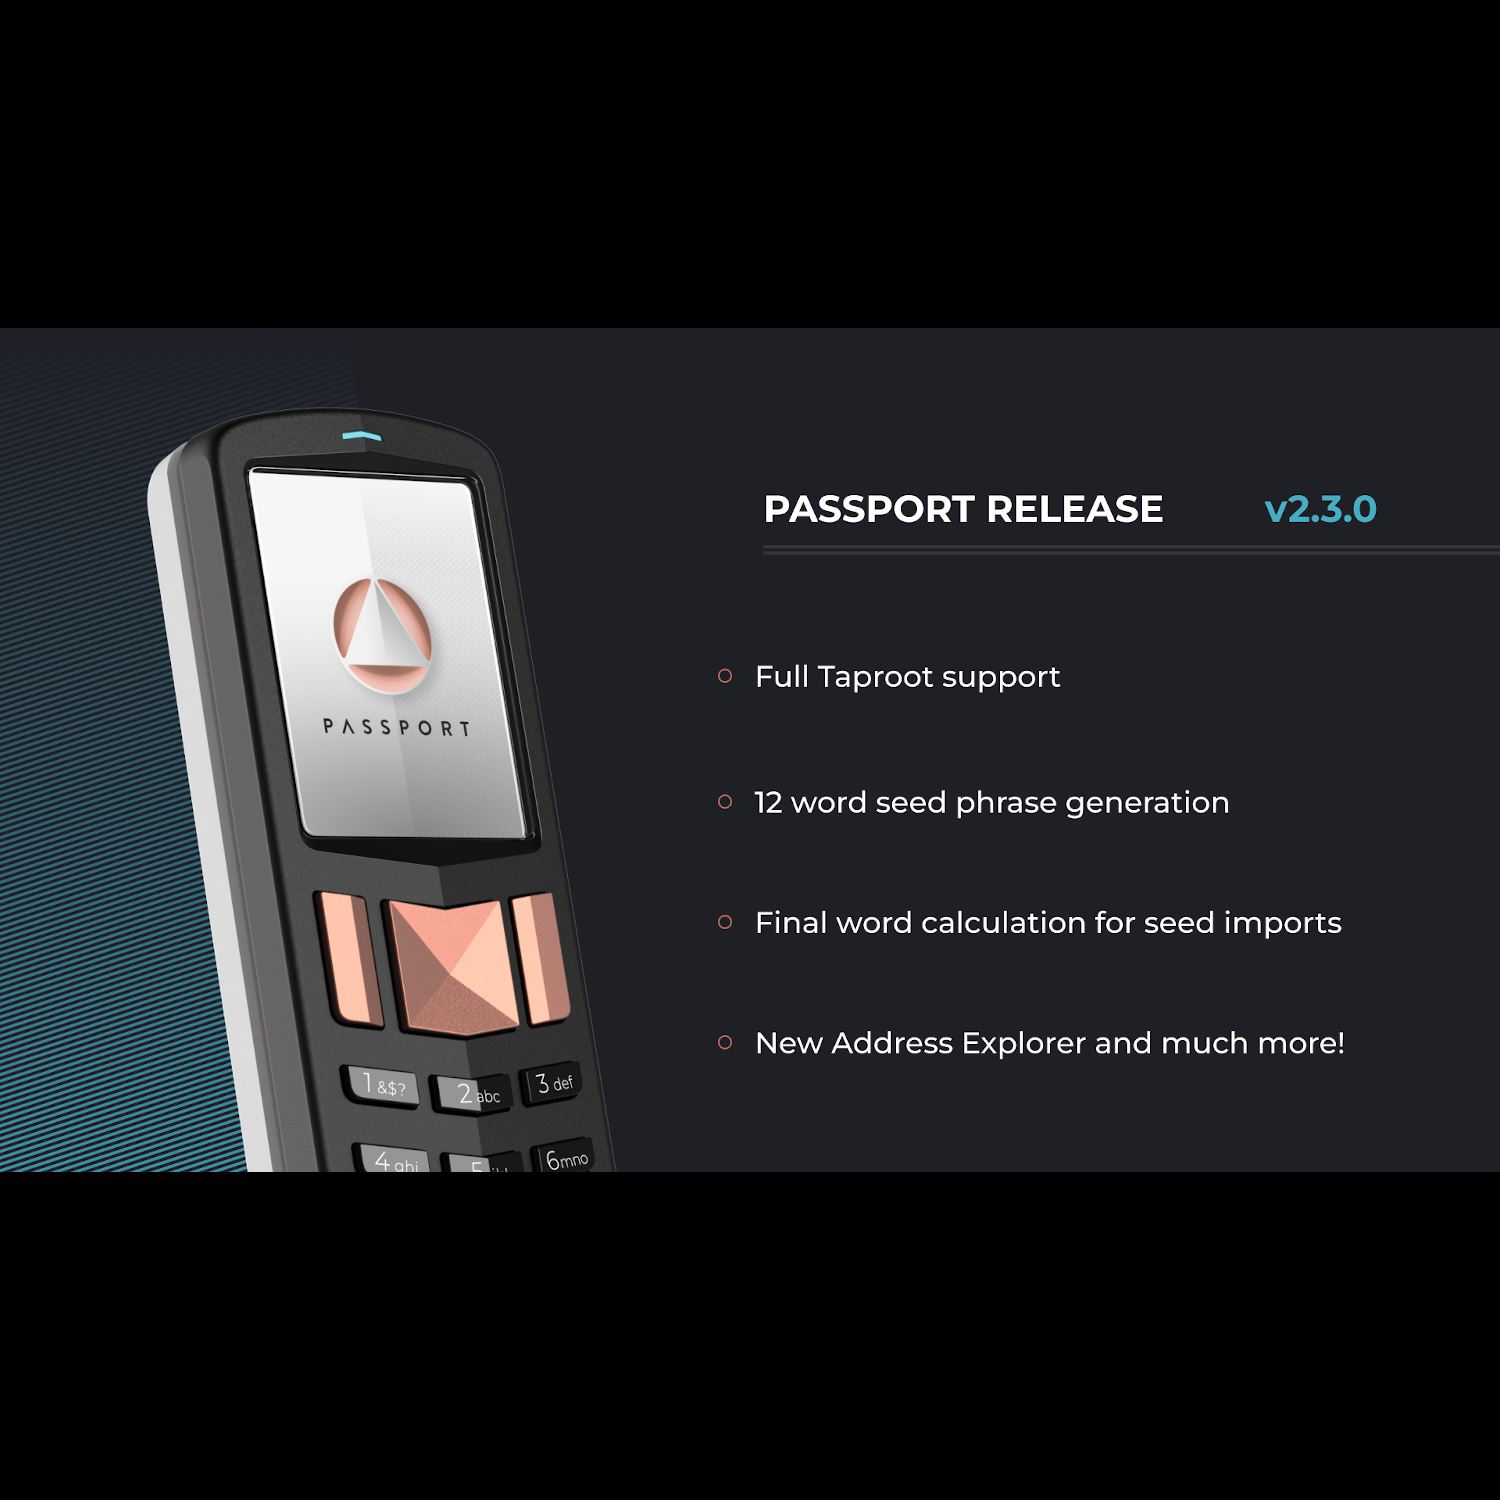 FOUNDATION Passport Firmware v2.3.0: Full Taproot Support